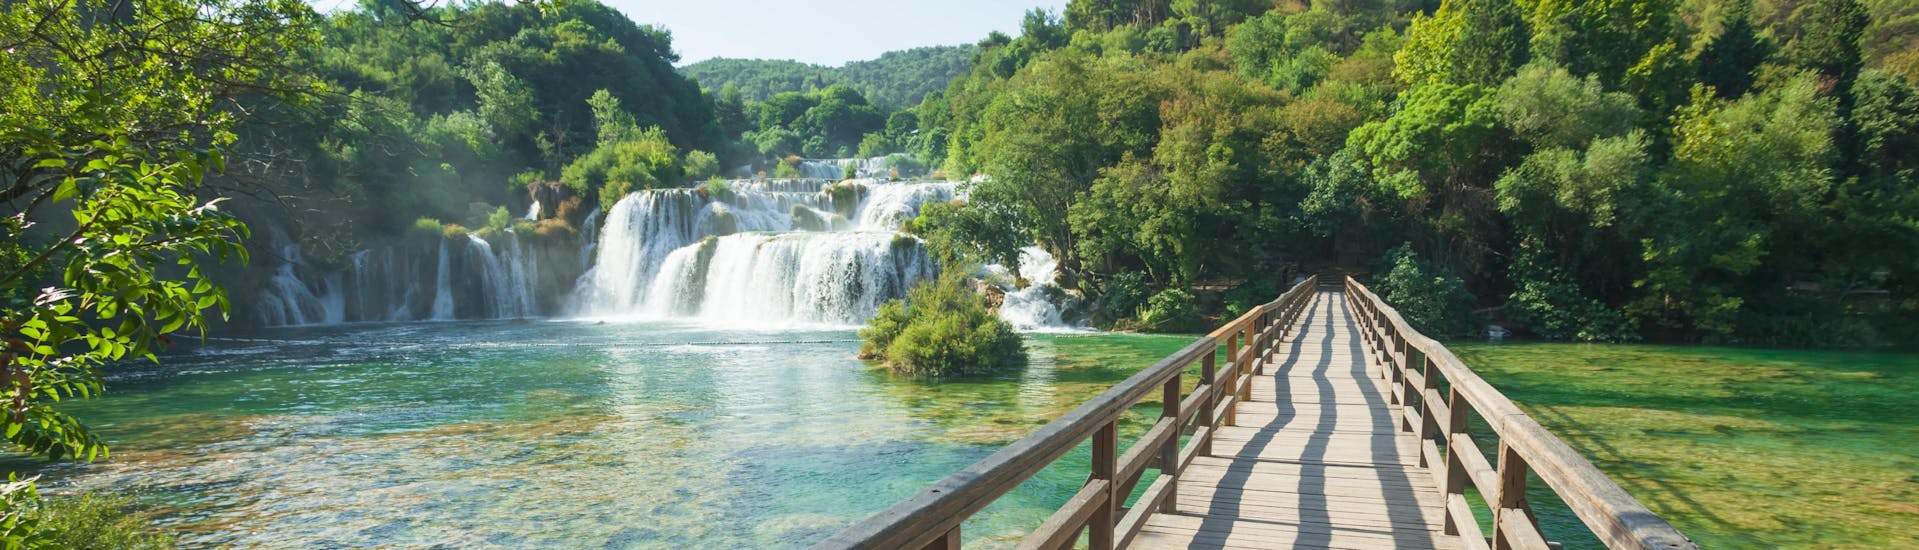 Bild der berühmten Wasserfälle des Krka-Nationalparks in Kroatien.